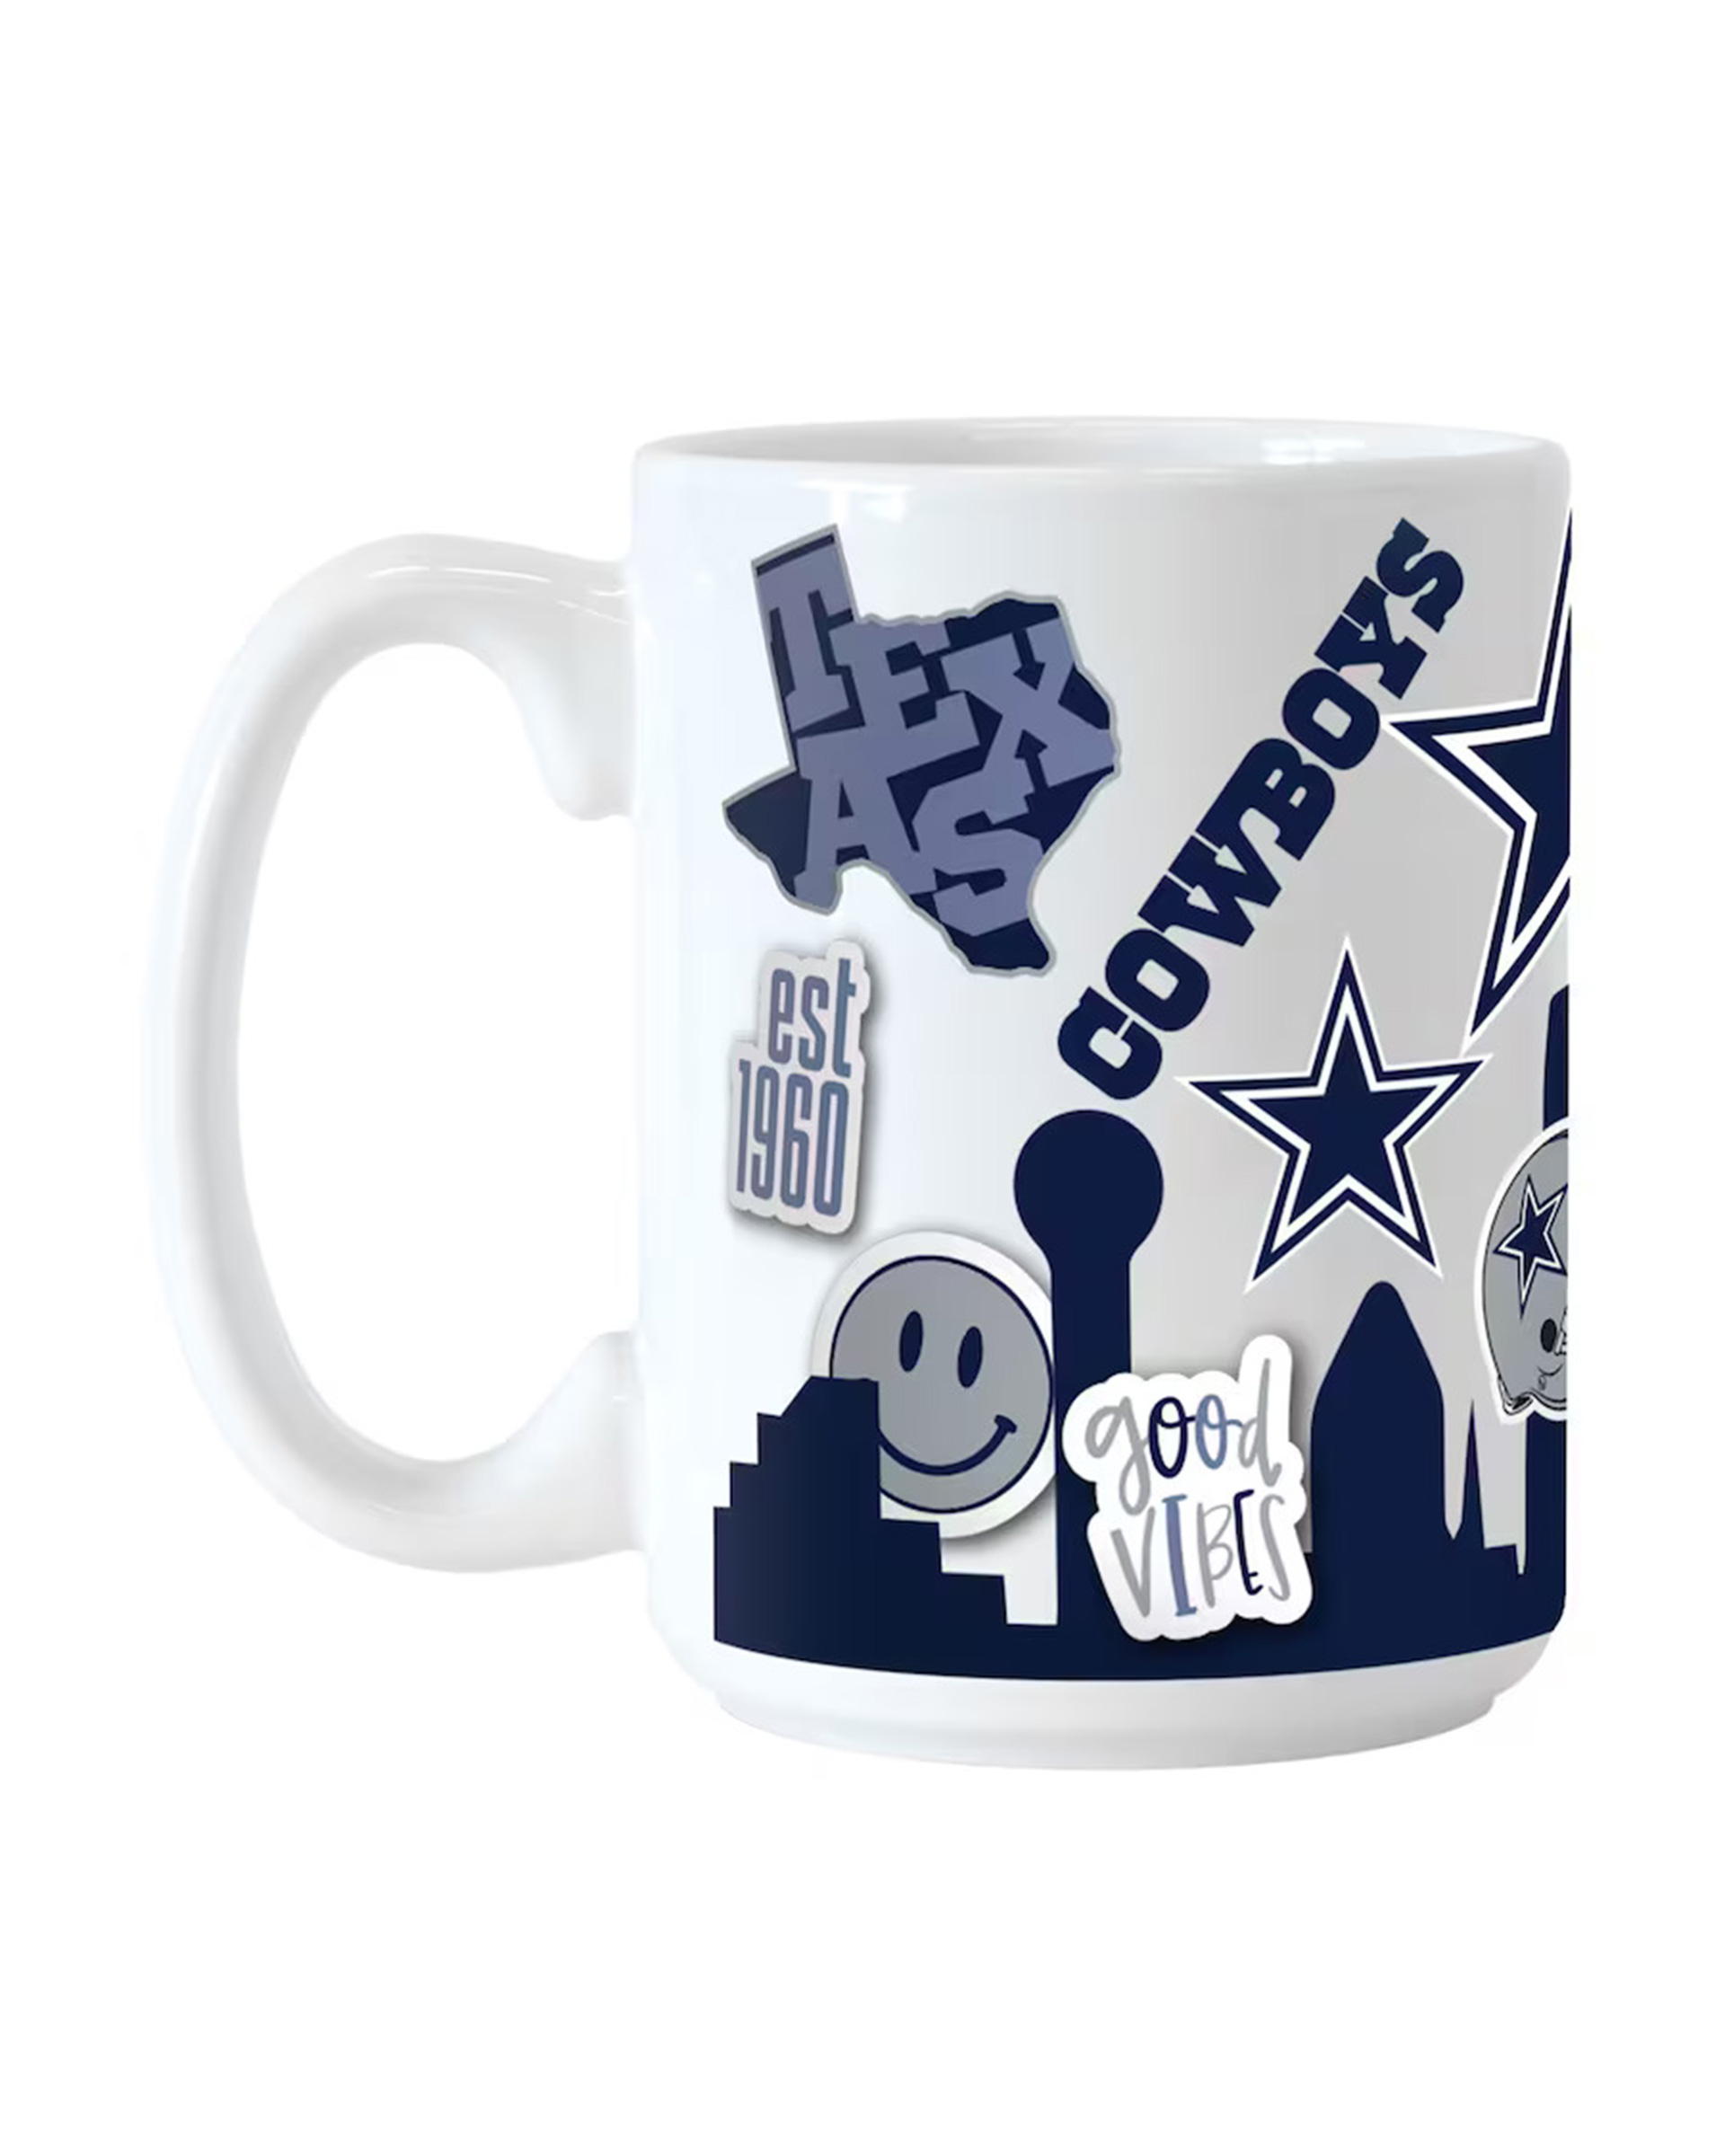 Dallas Cowboys Pro Shop - The Pro Shop is THE #CowboysNation destination  for the widest, deepest assortment of #DallasCowboys jerseys 